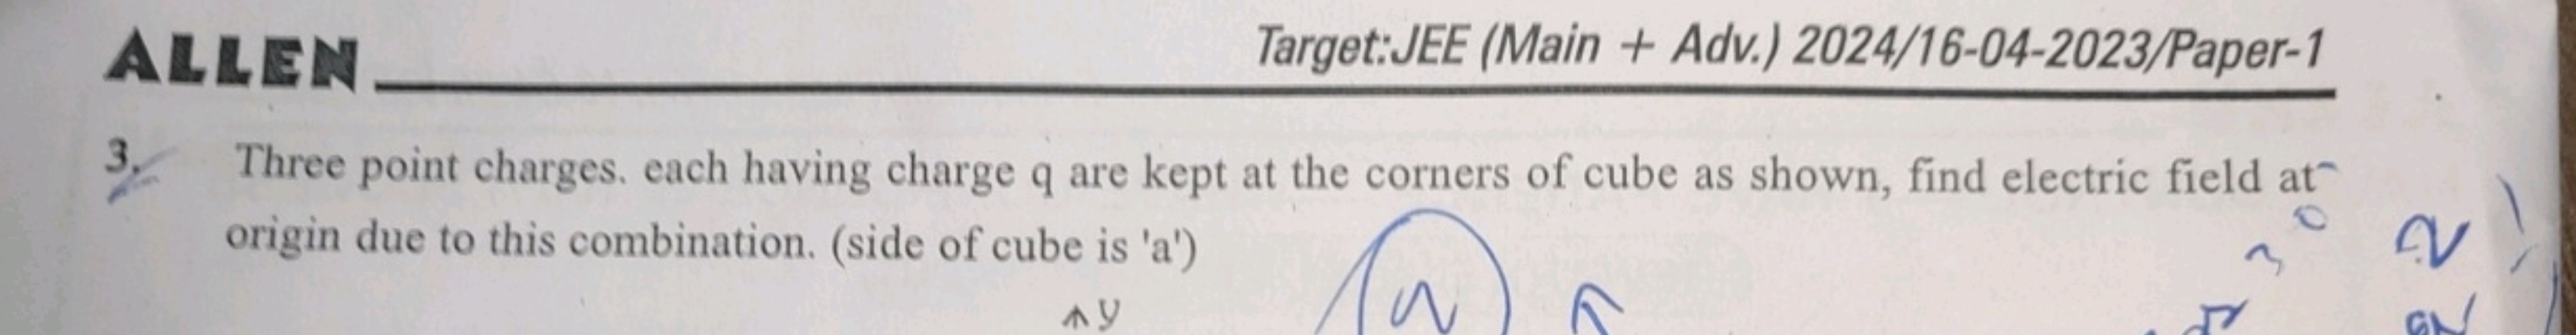 ALLEN
Target:JEE (Main + Adv.) 2024/16-04-2023/Paper-1
3. Three point 